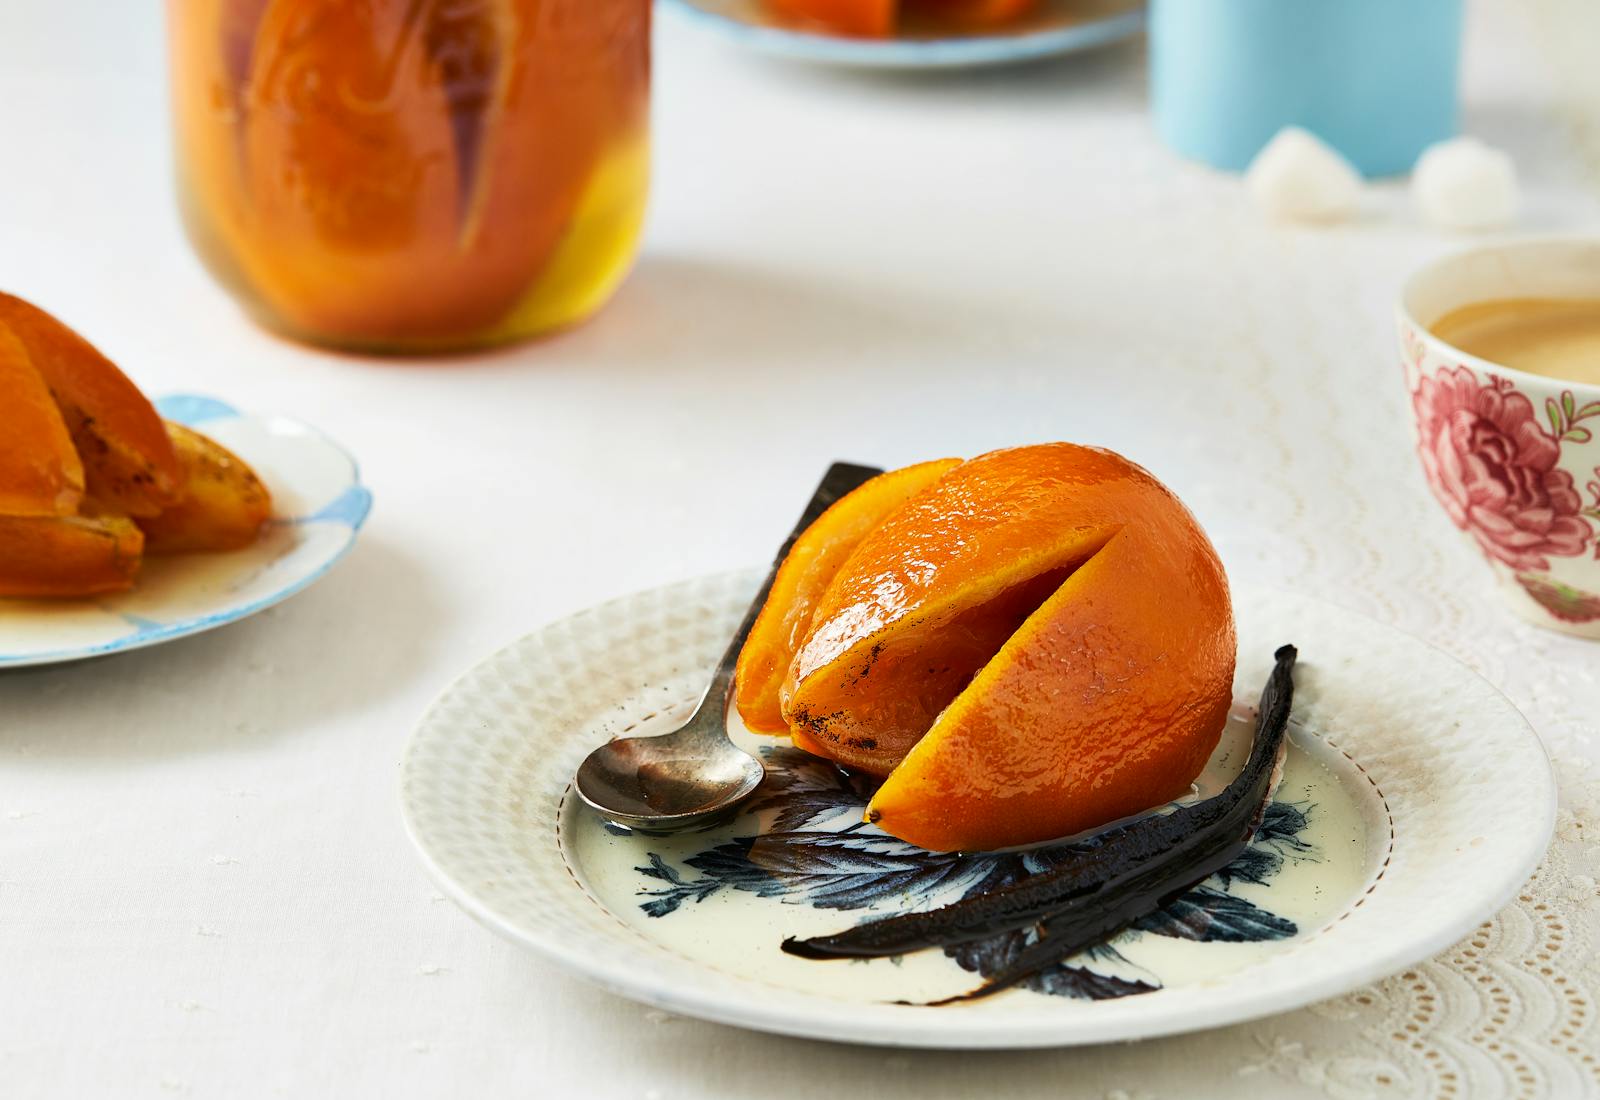 Candied orange on small white plate alongside whole vanilla bean.